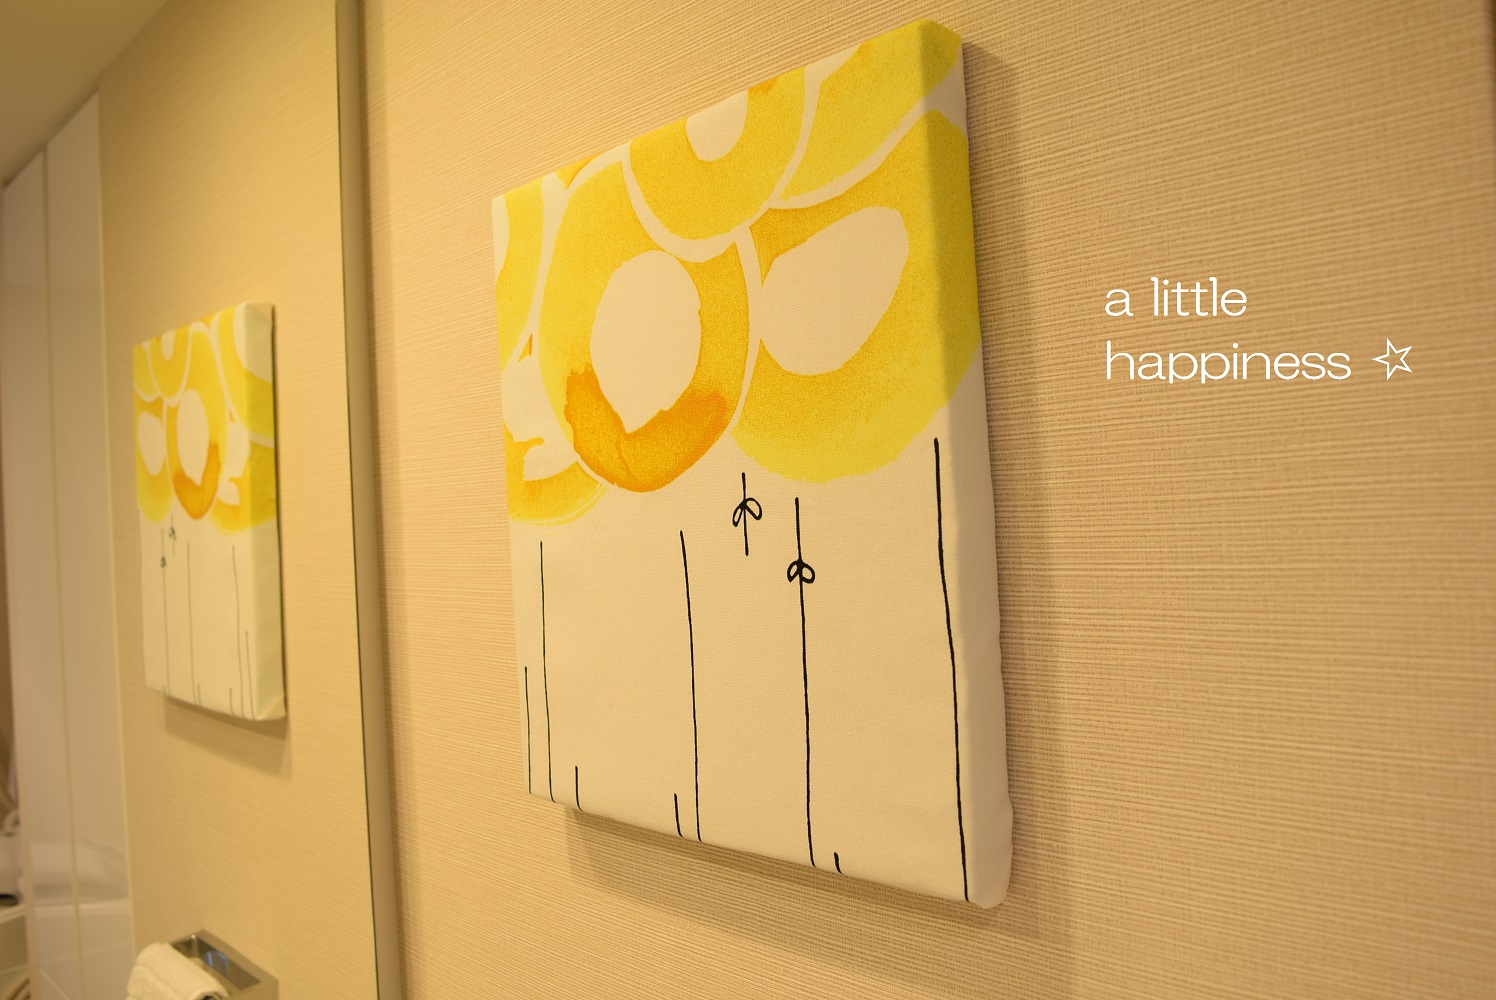 IKEAの布でファブリックパネル☆ | 小さな幸せ♪家づくりと食いしん坊日記～ - 楽天ブログ